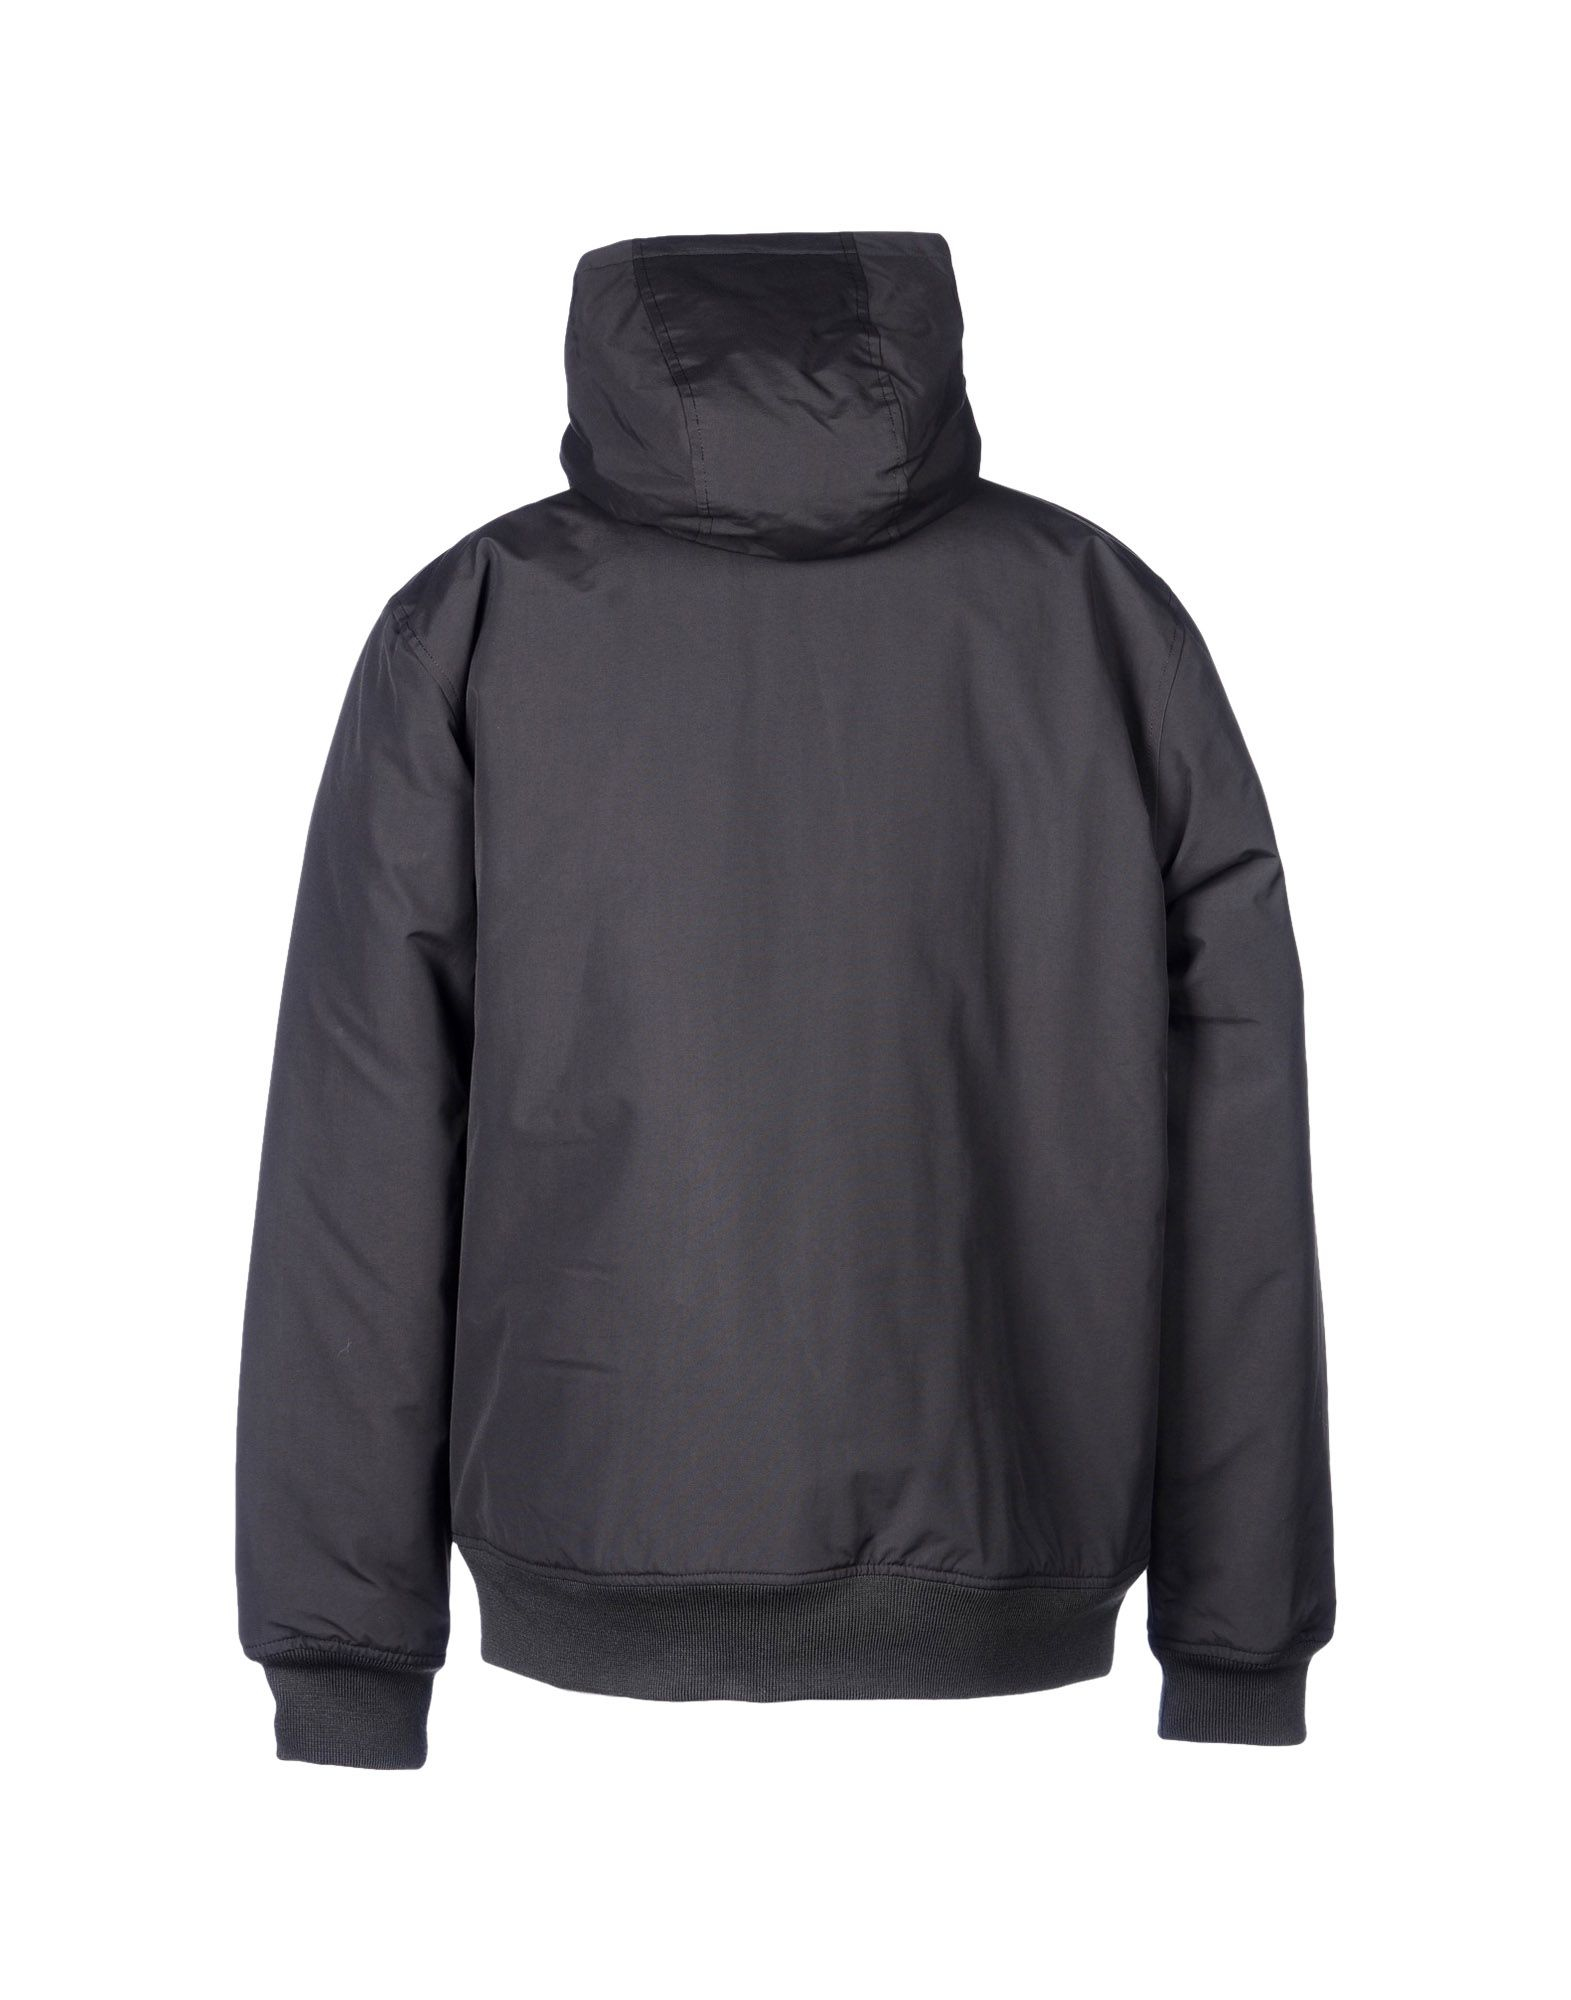 Lyst - Carhartt Jacket in Gray for Men